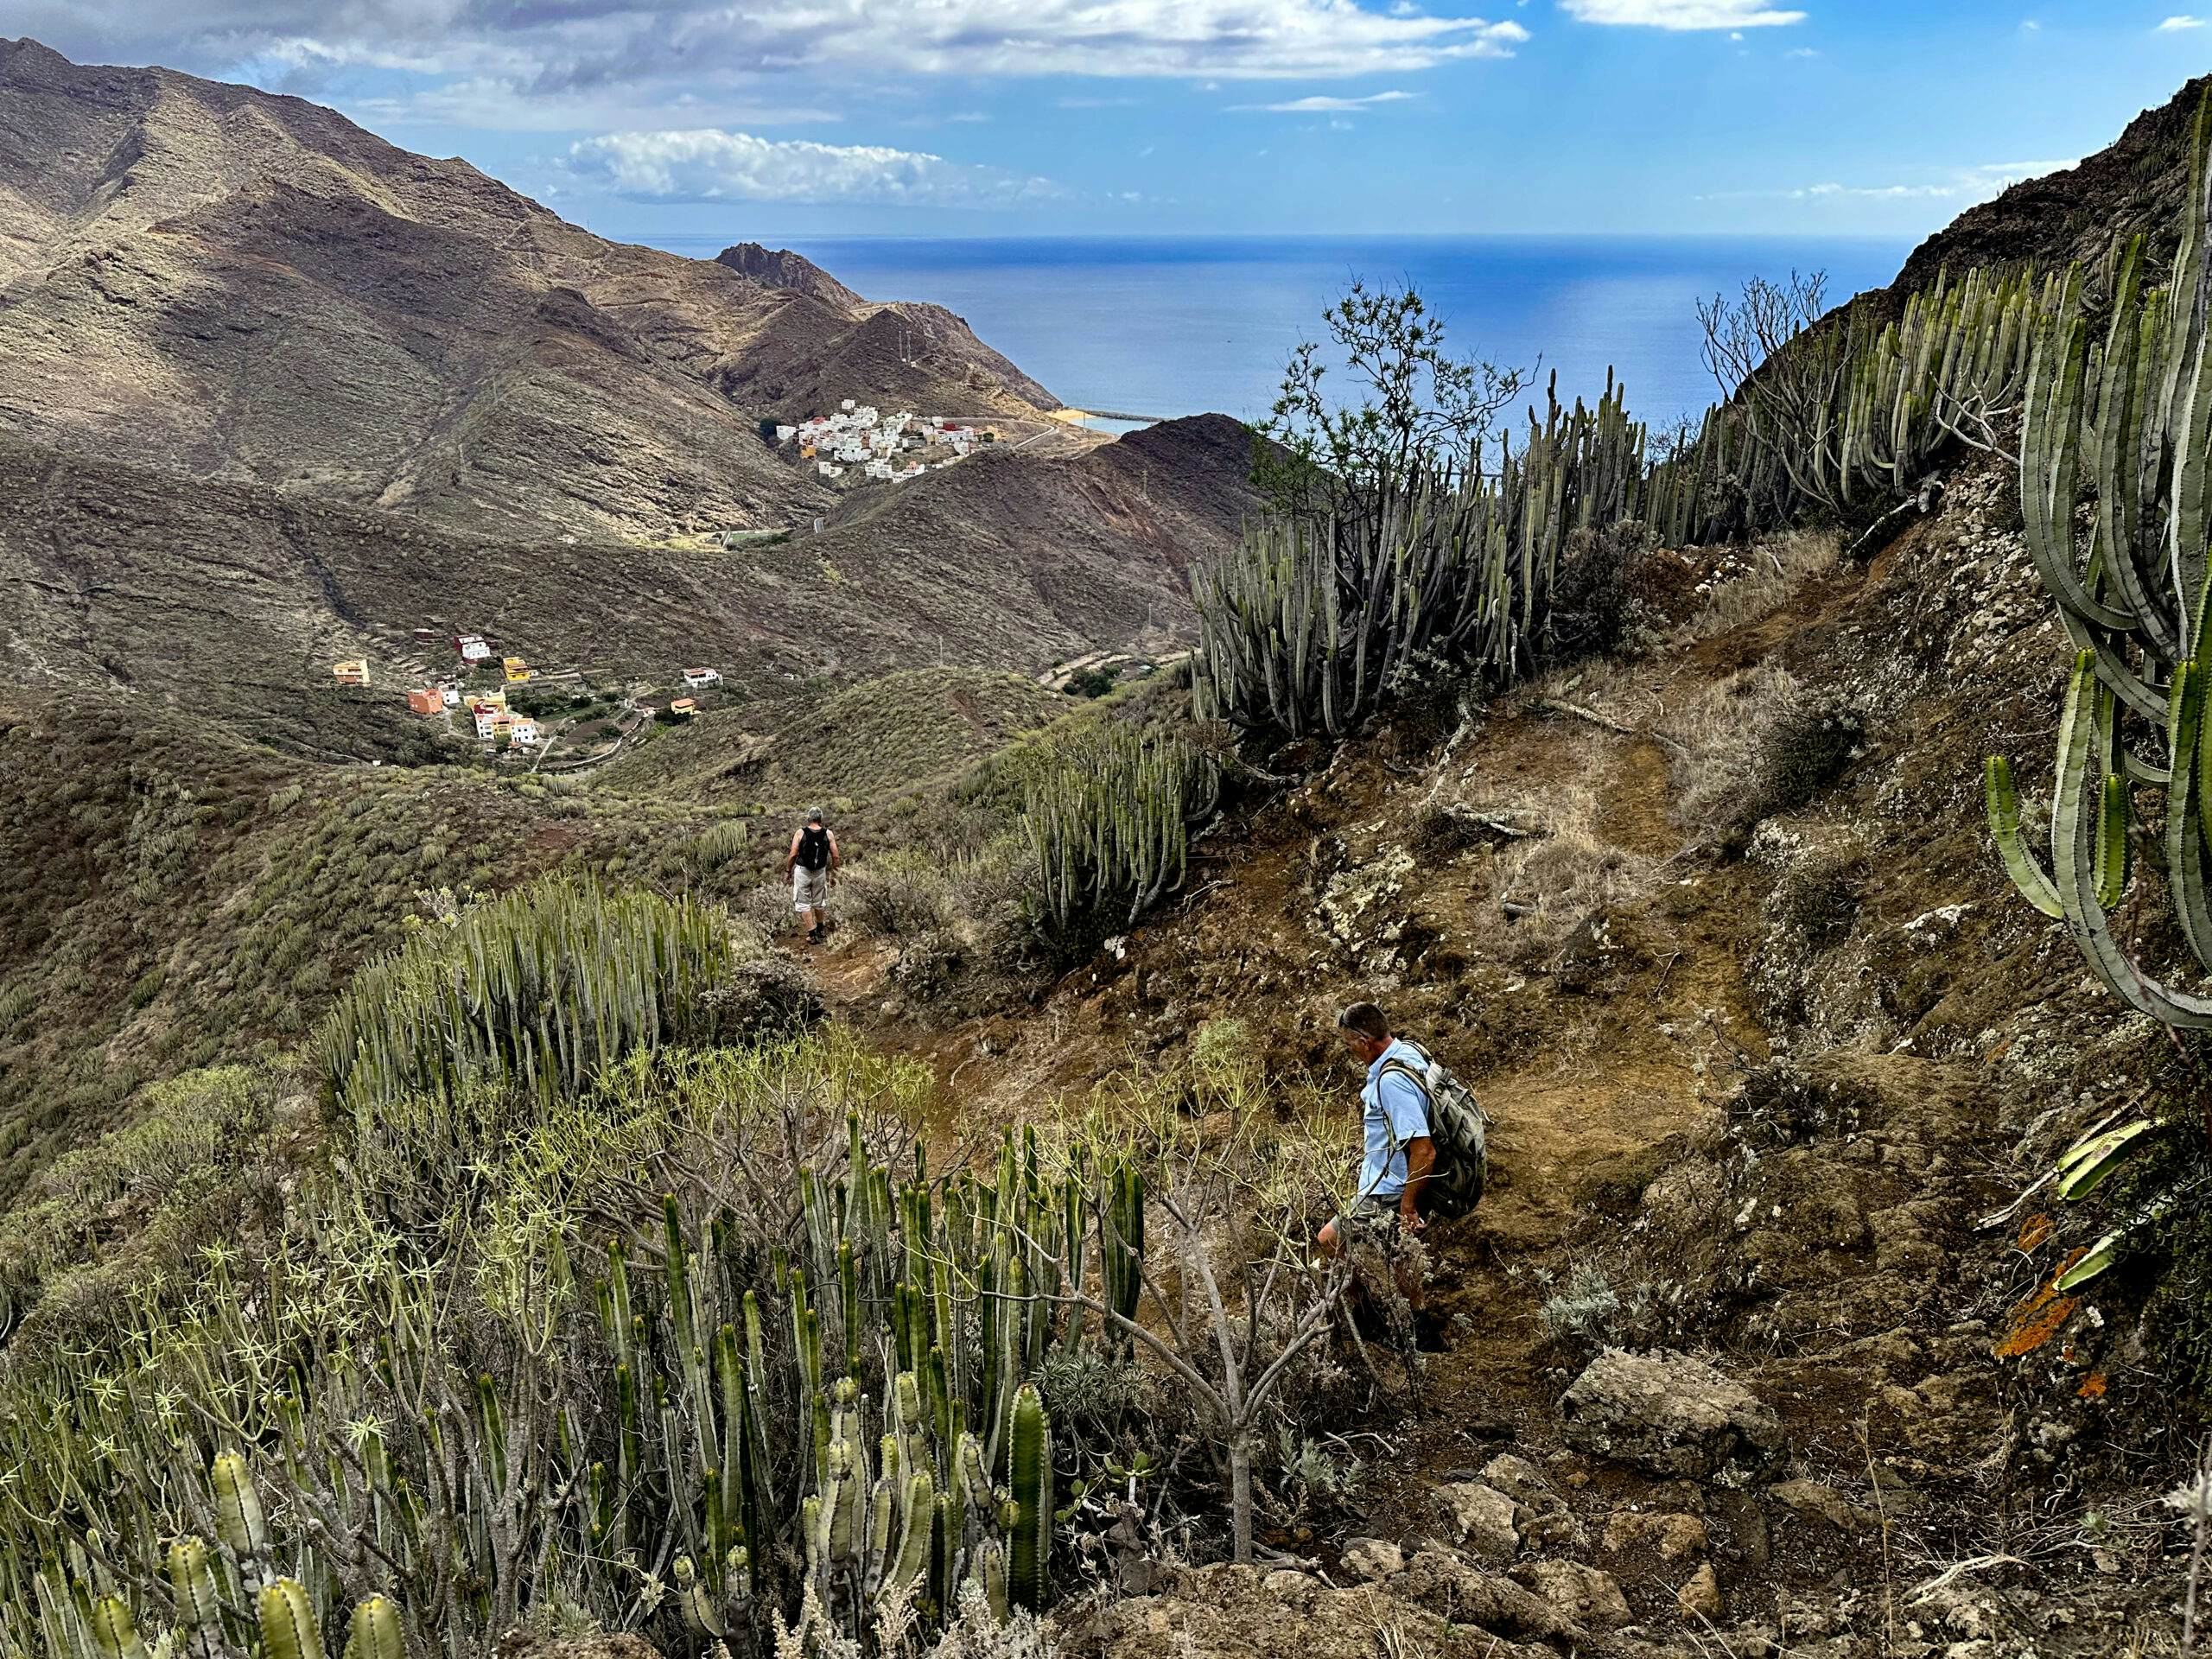 Hikers on the descent towards San Andrés